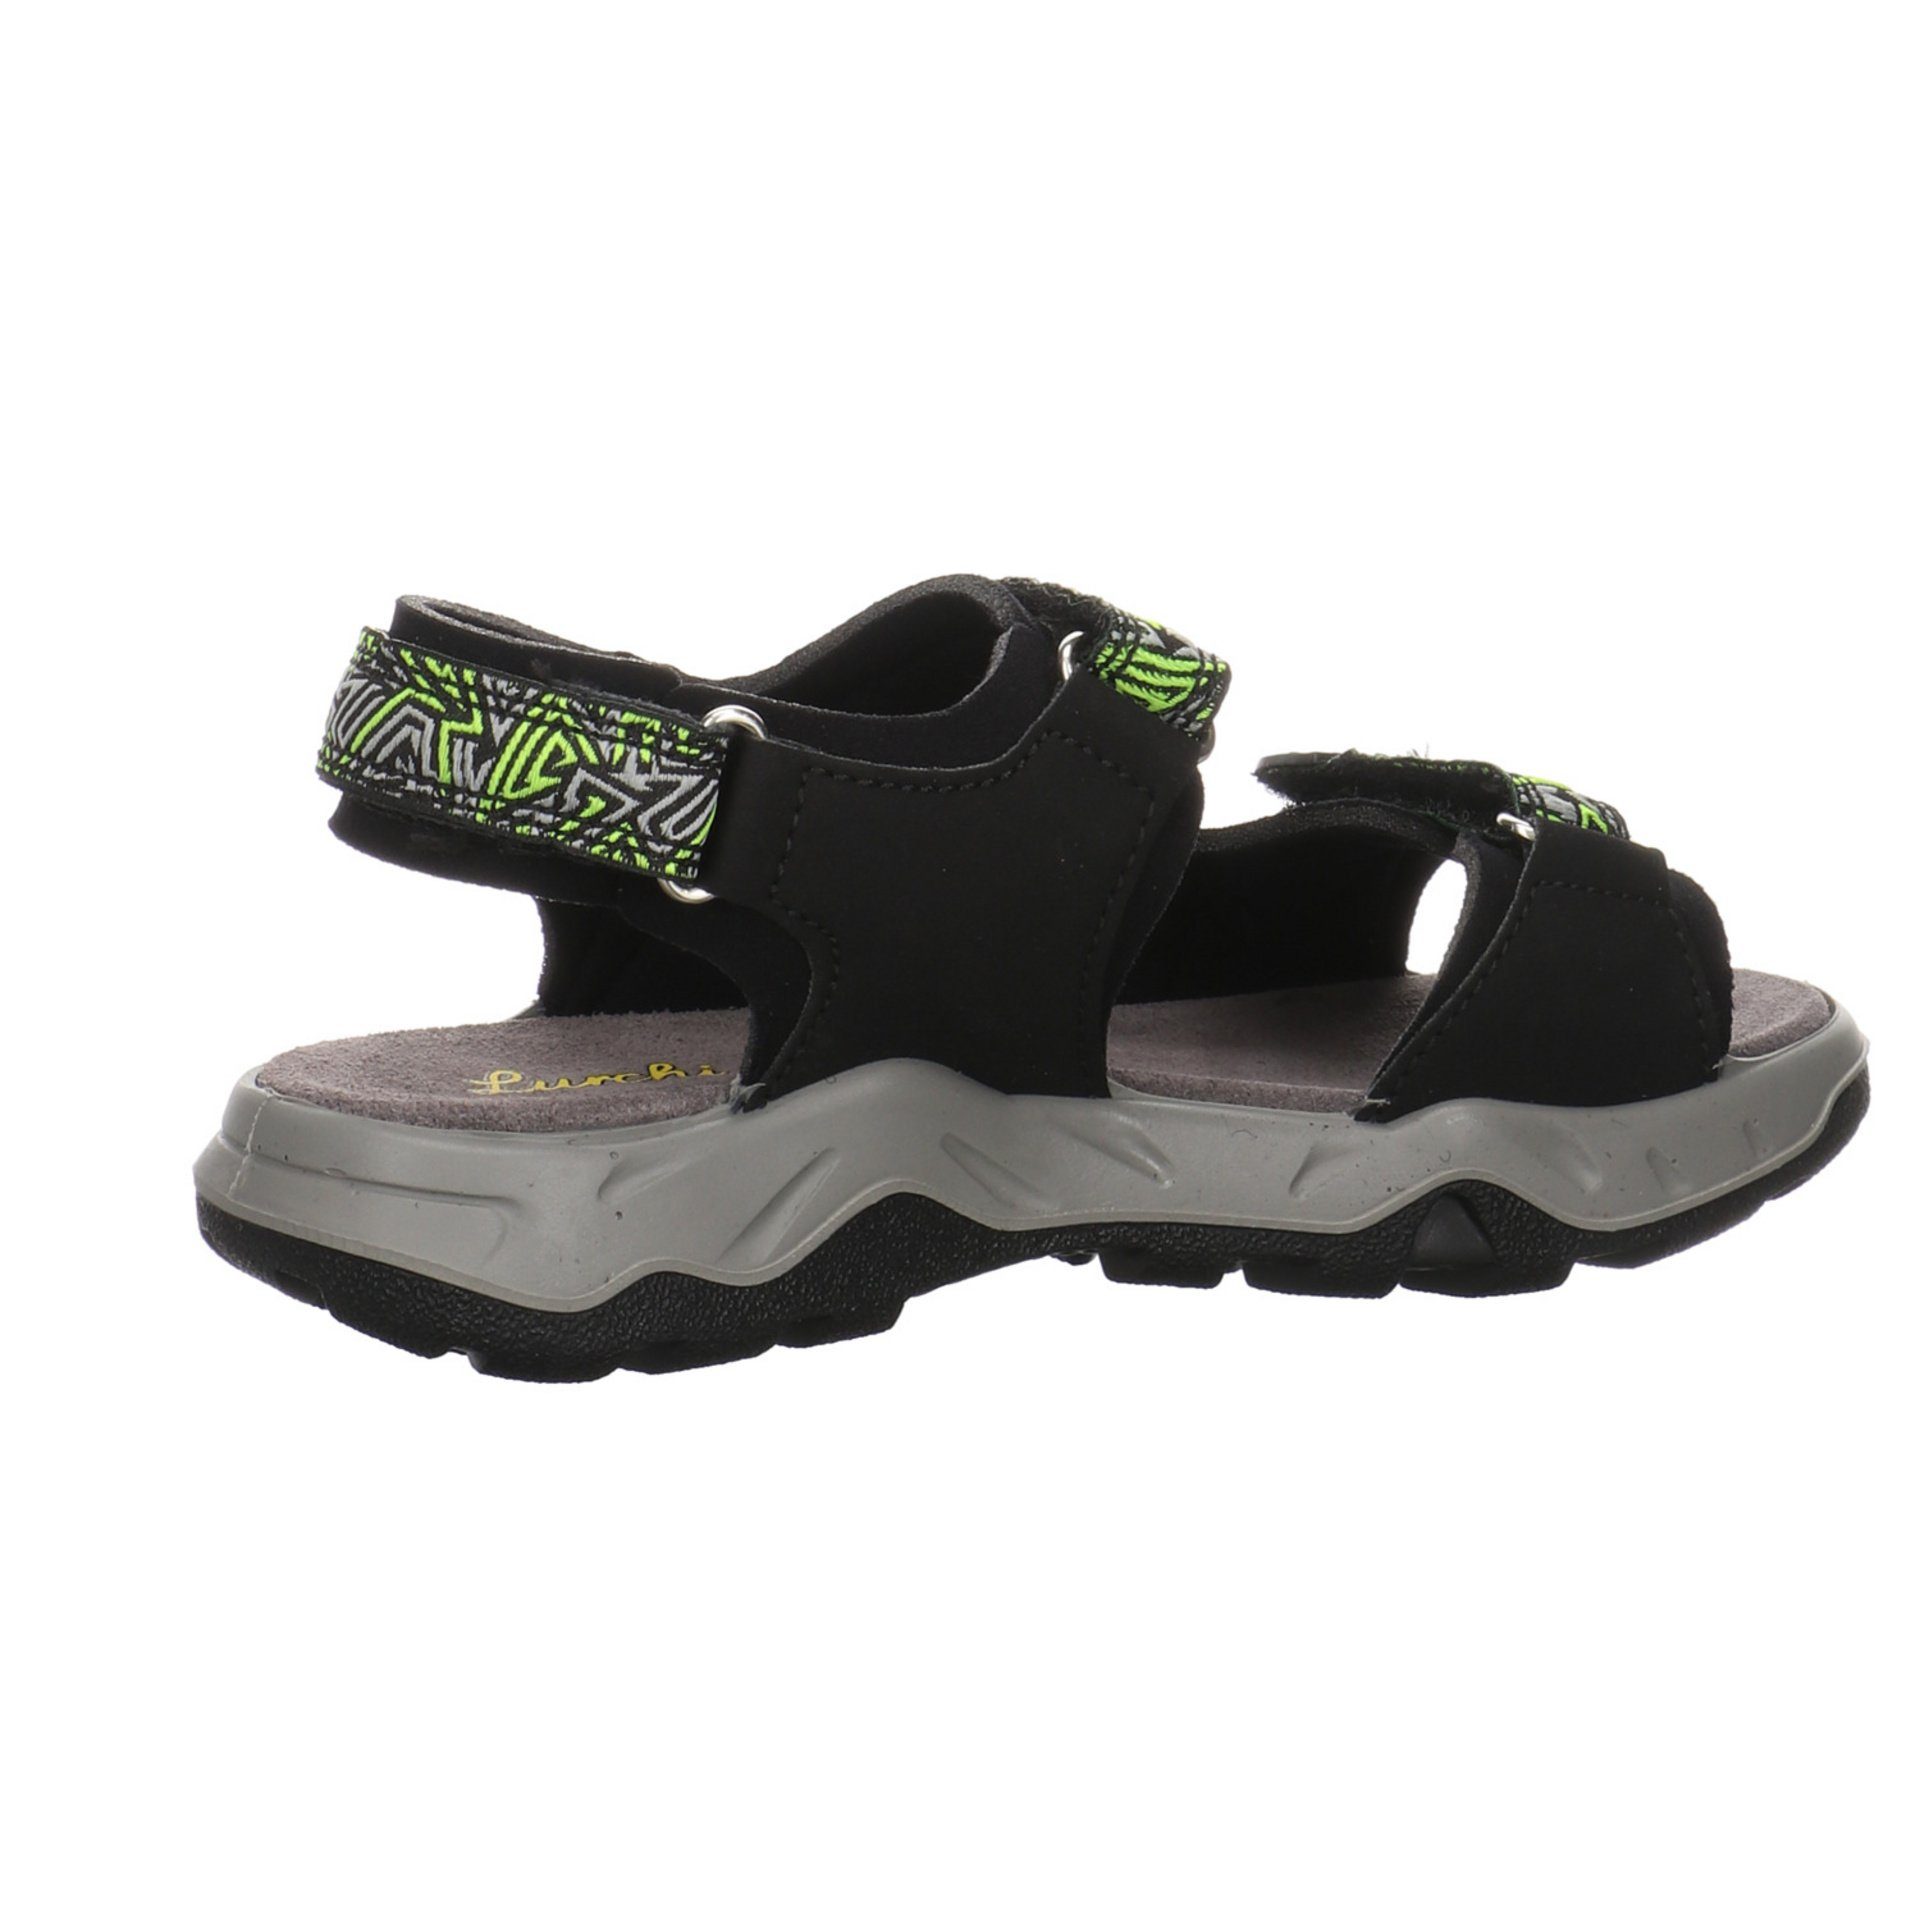 Sandale Lurchi Salamander Kinderschuhe Synthetikkombination Black Schuhe Multi Jungen Odono Sandale Sandalen